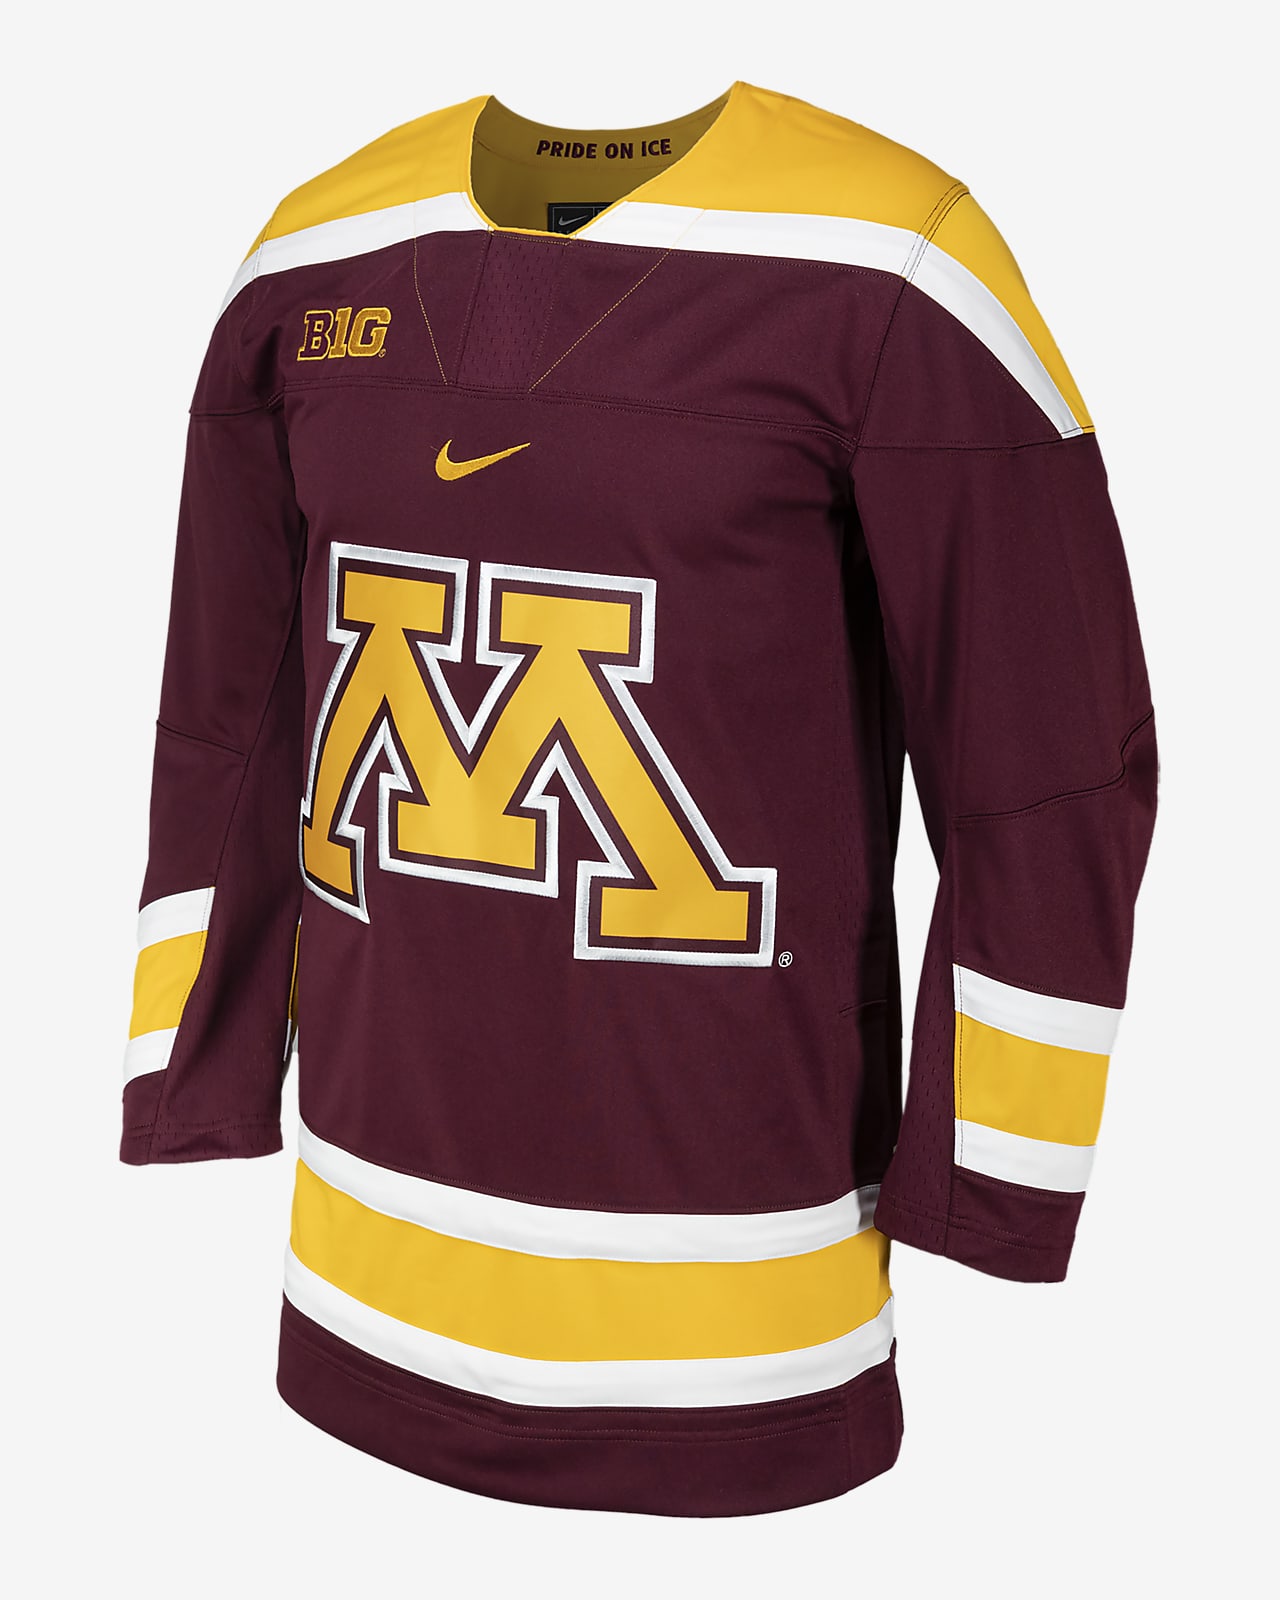 Minnesota Men's Nike College Hockey Jersey